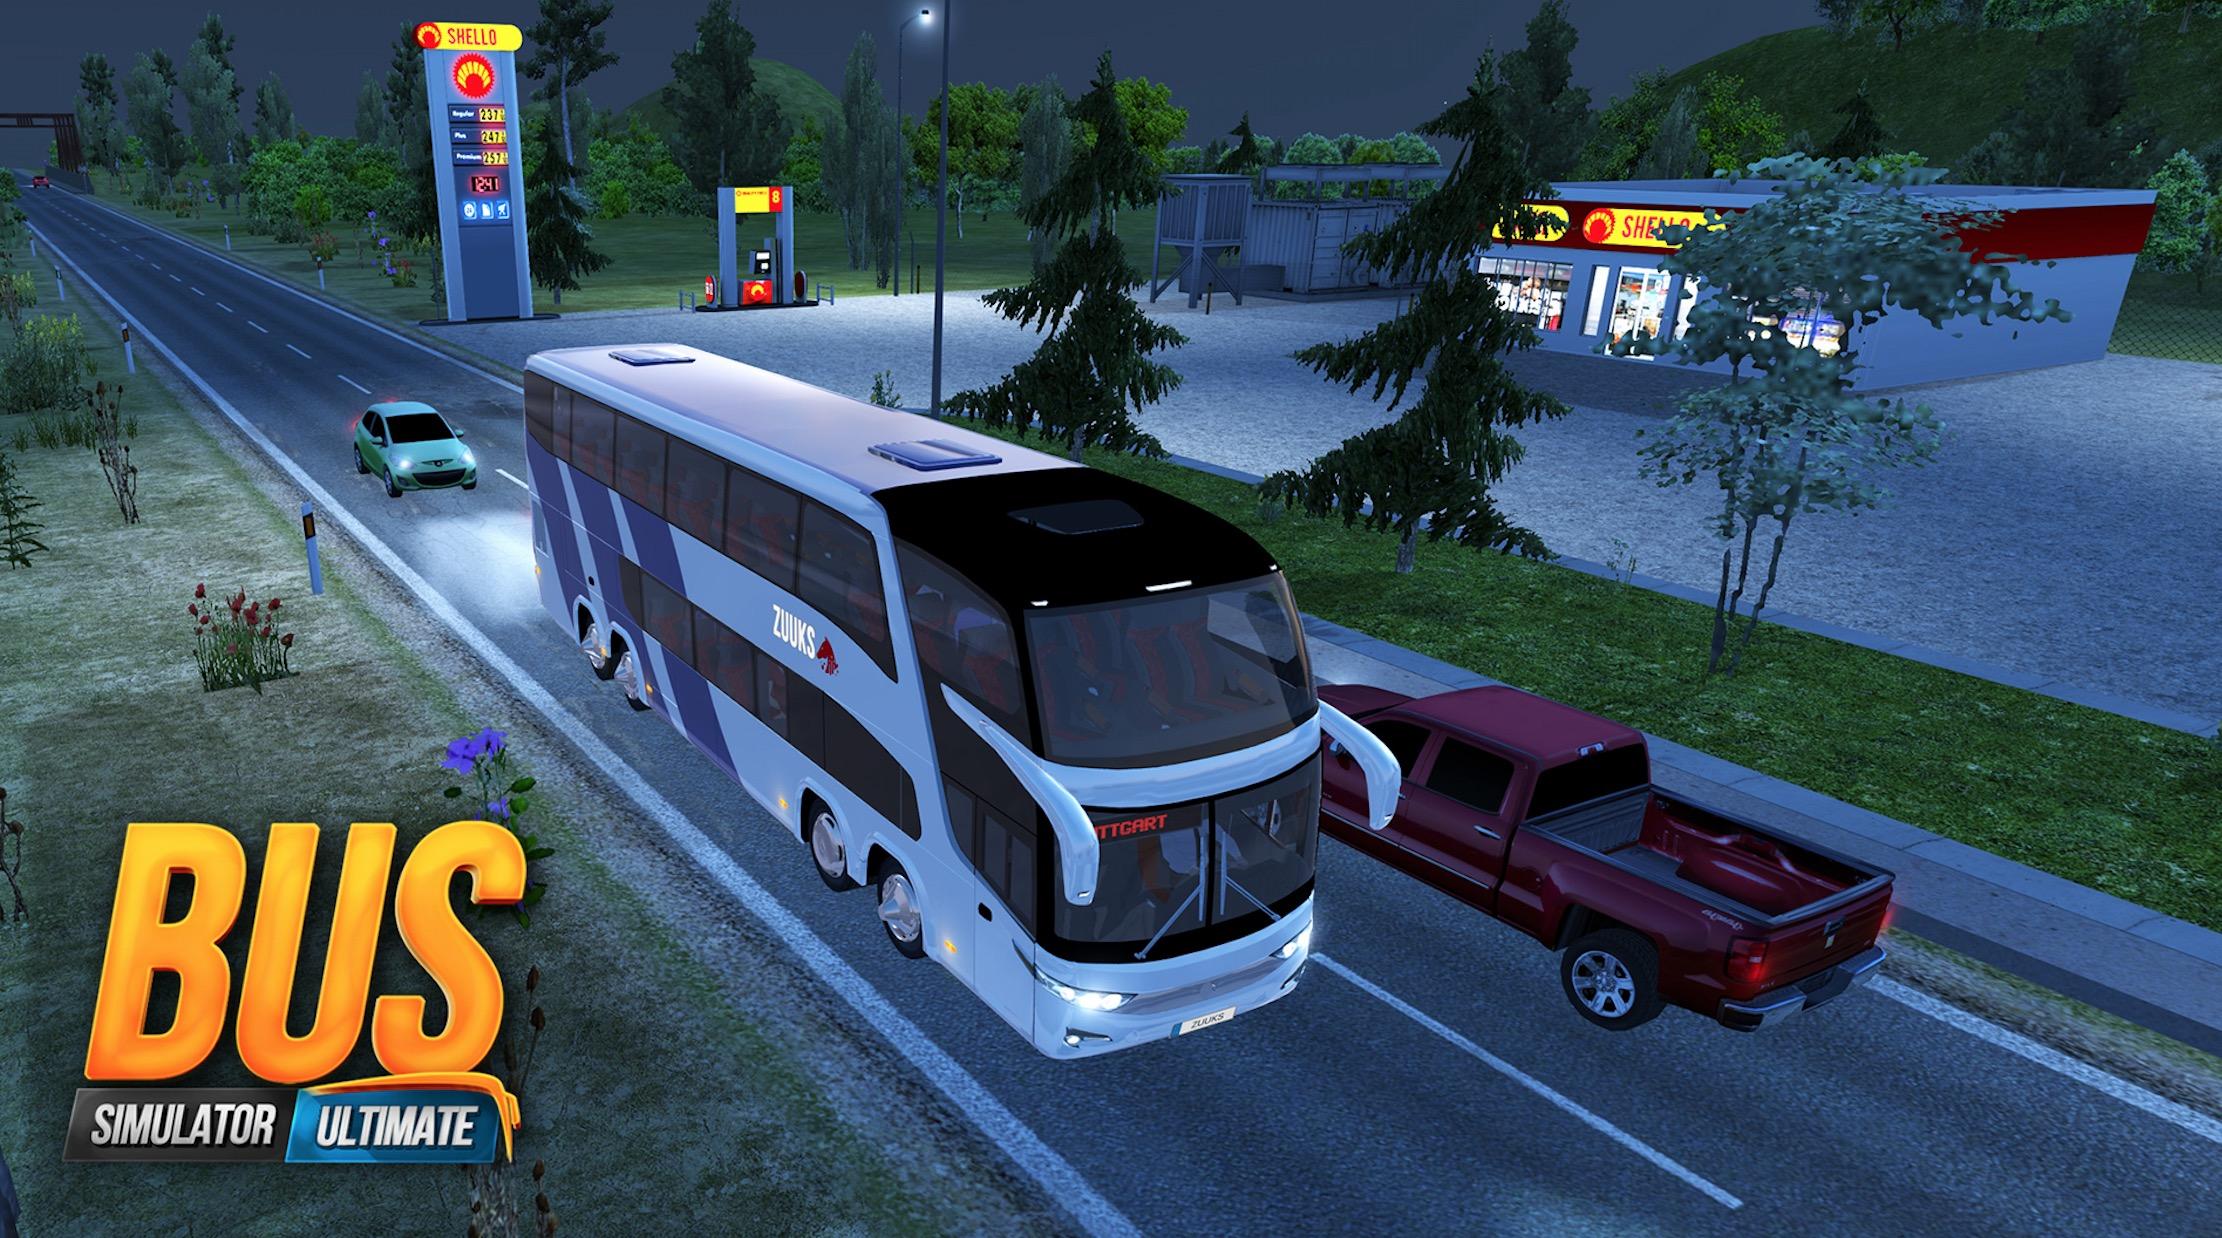 Ultimate автобус игры. Симулятор автобуса Ultimate. Игра автобус ультимейт. Бус симулятор ультимейт. Bus Simulator Ultimate автобусы.